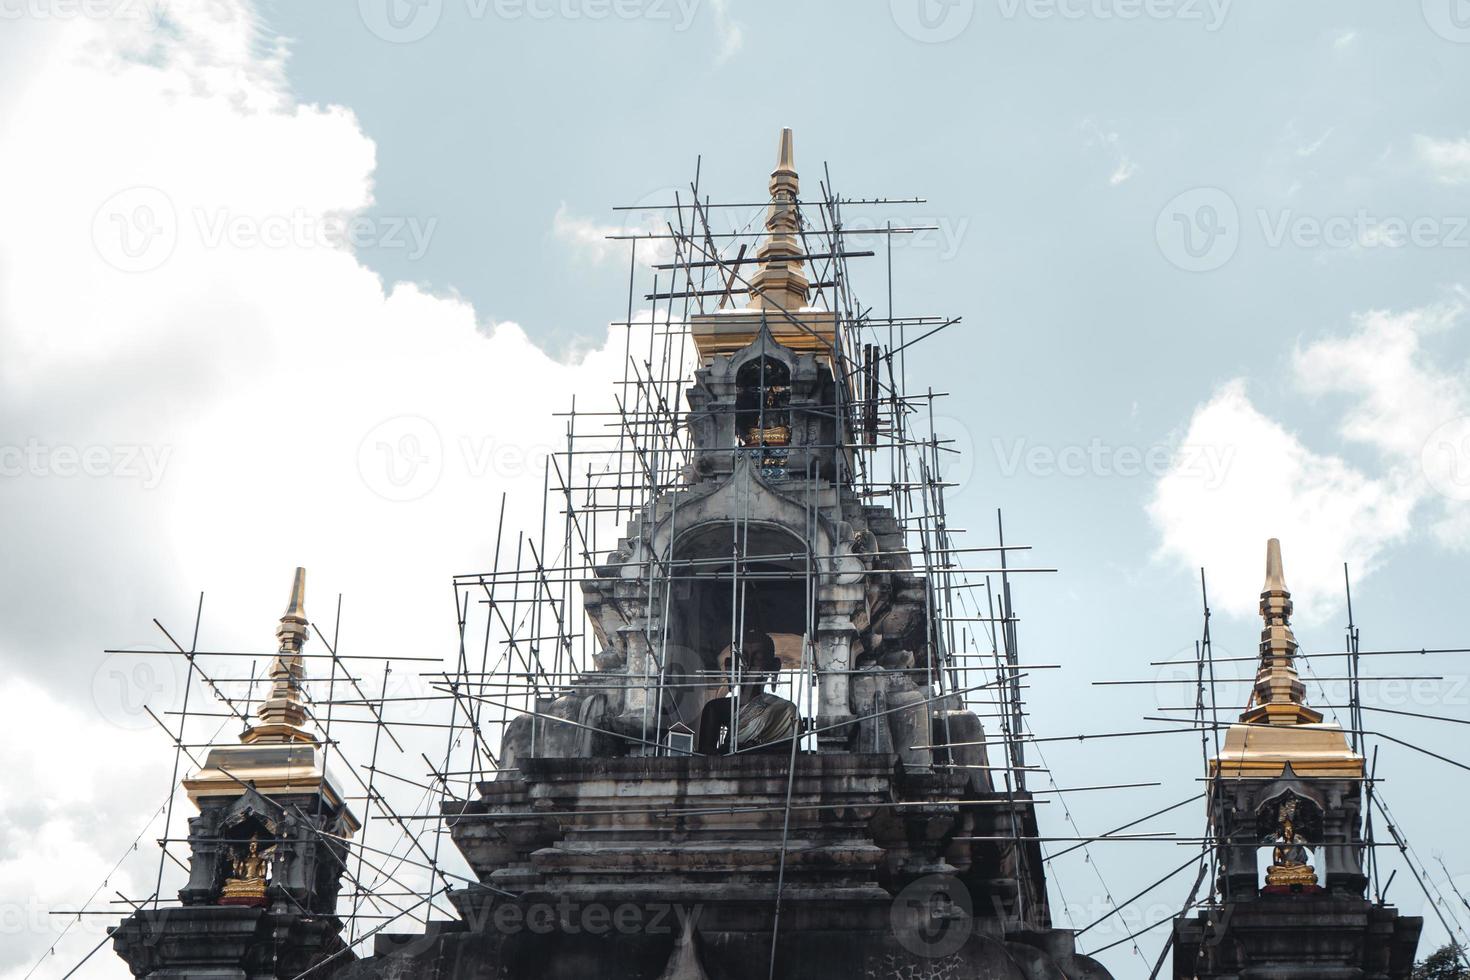 Wat Phra Buddhabat Si Roi,Golden Temple in Chiang Mai, Thailand photo